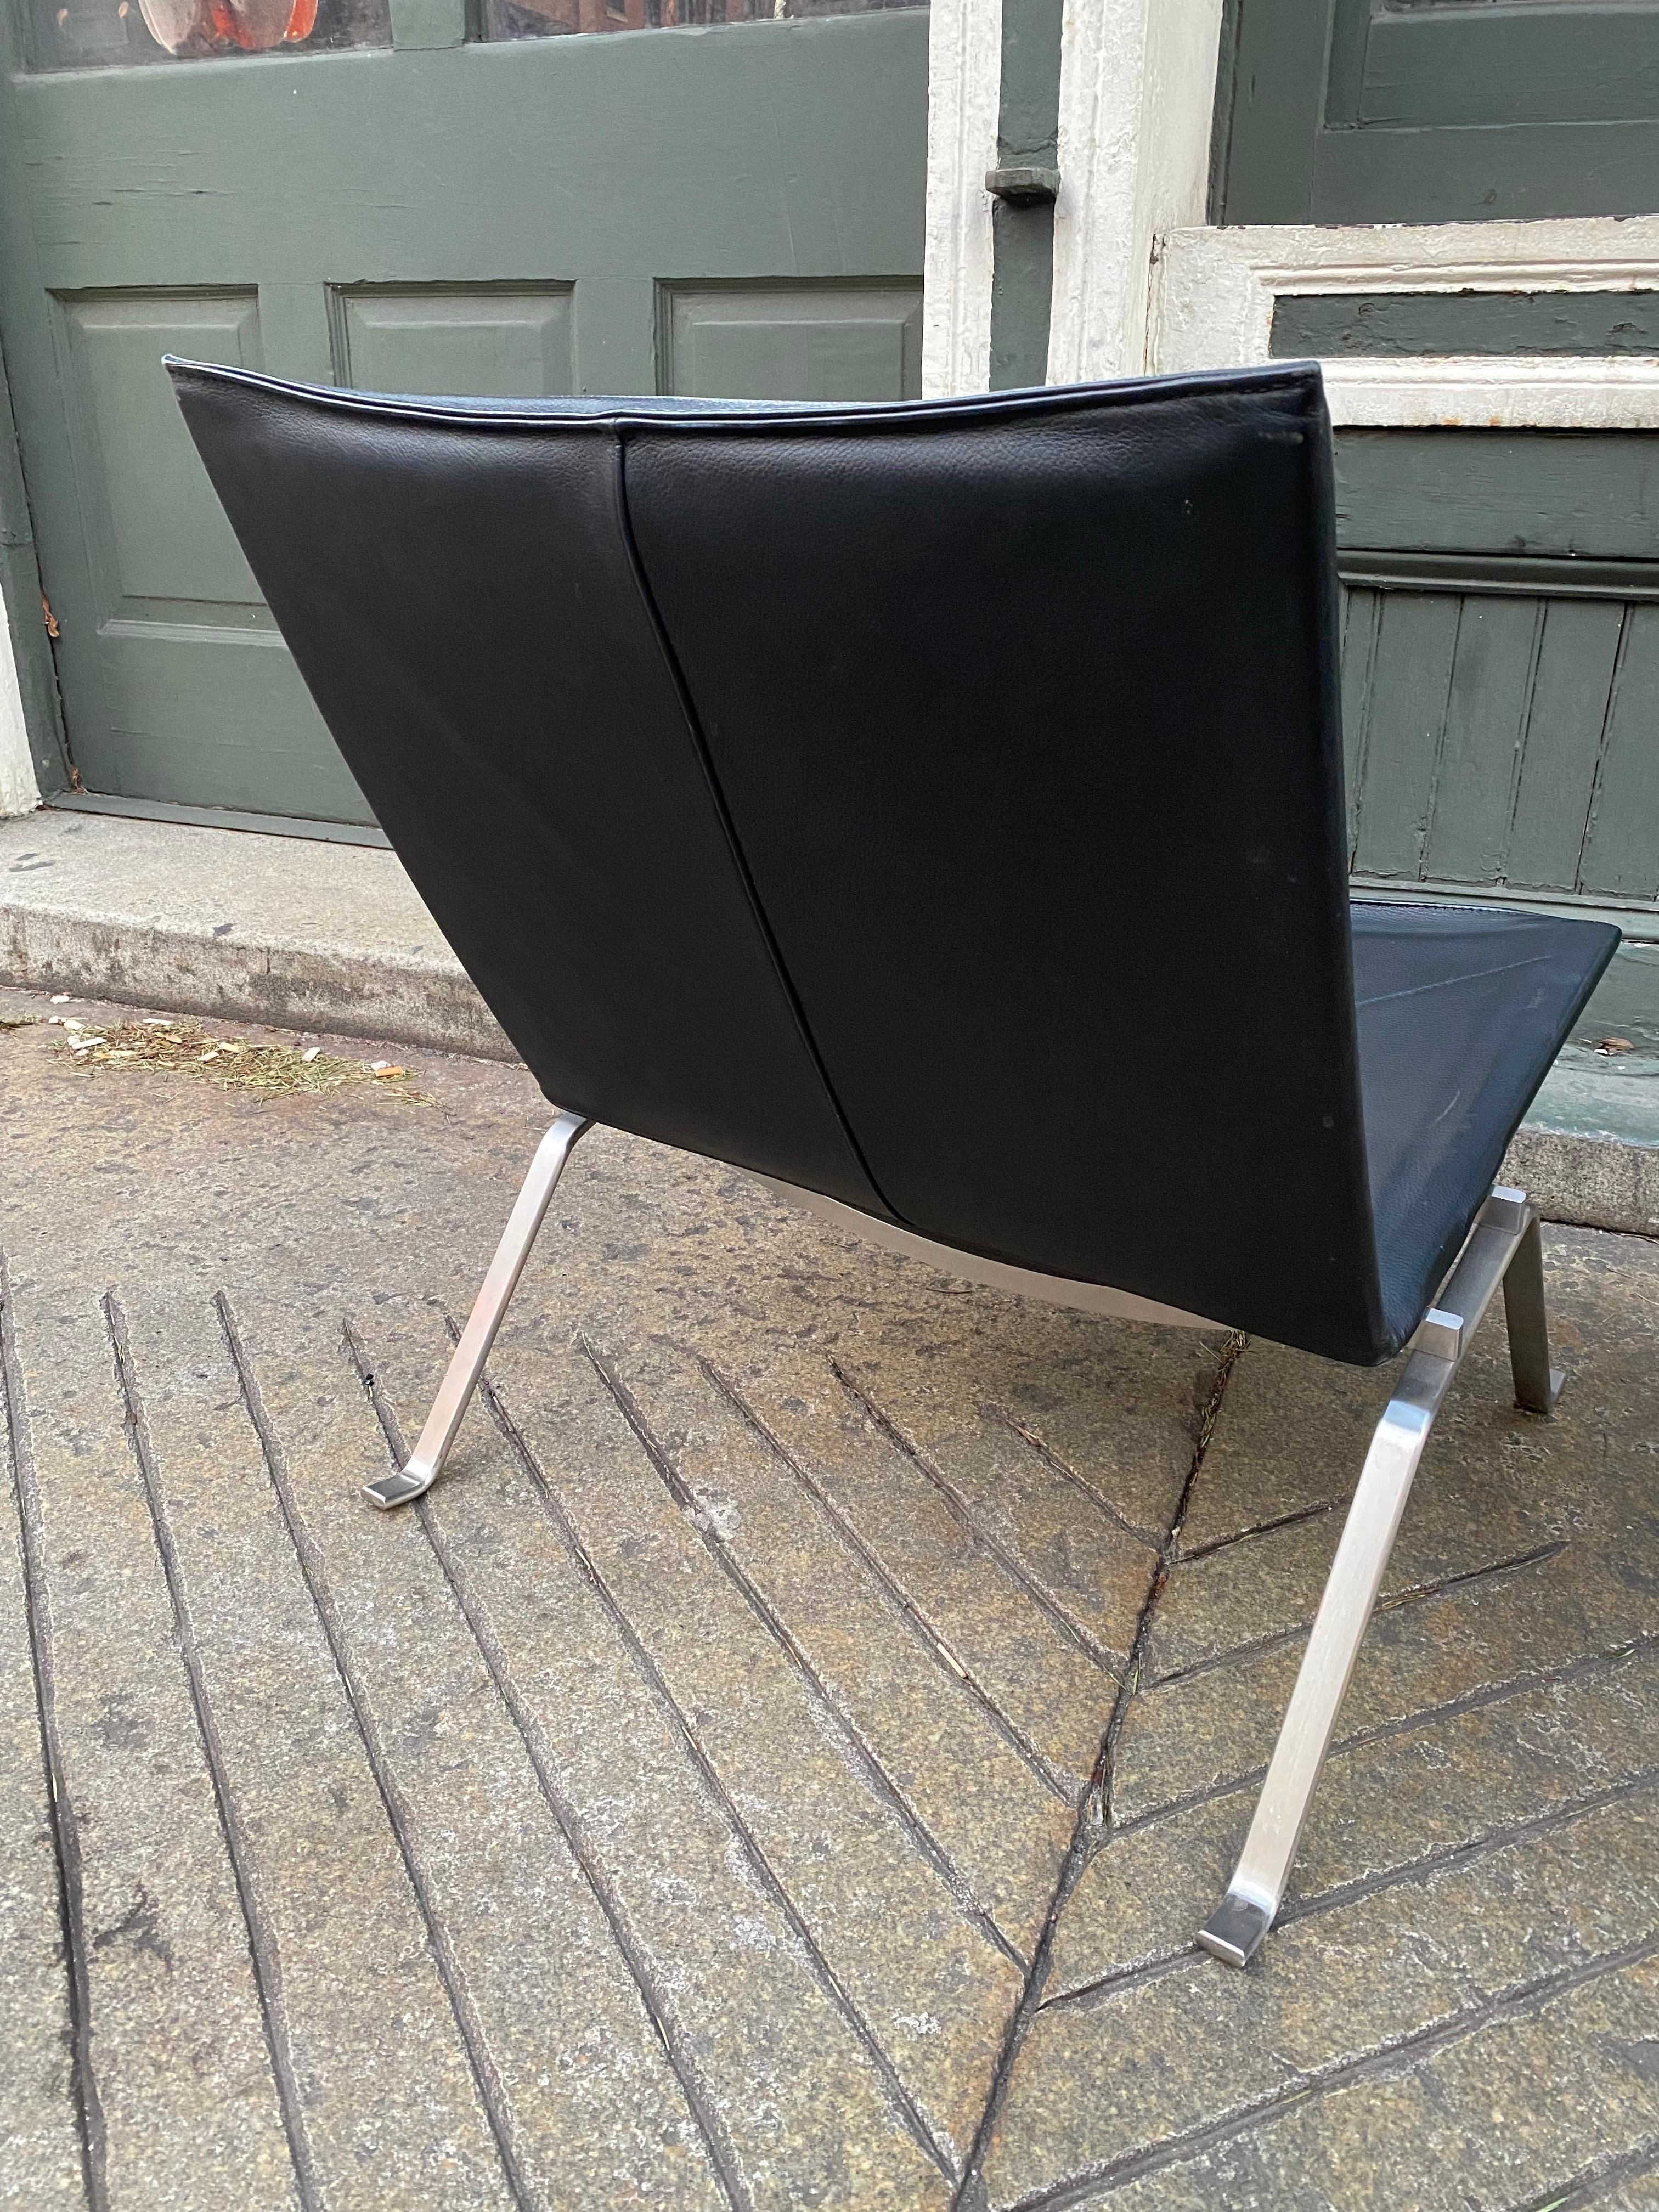 Stainless Steel Poul Kjaerholm PK22 Black Leather Chairs